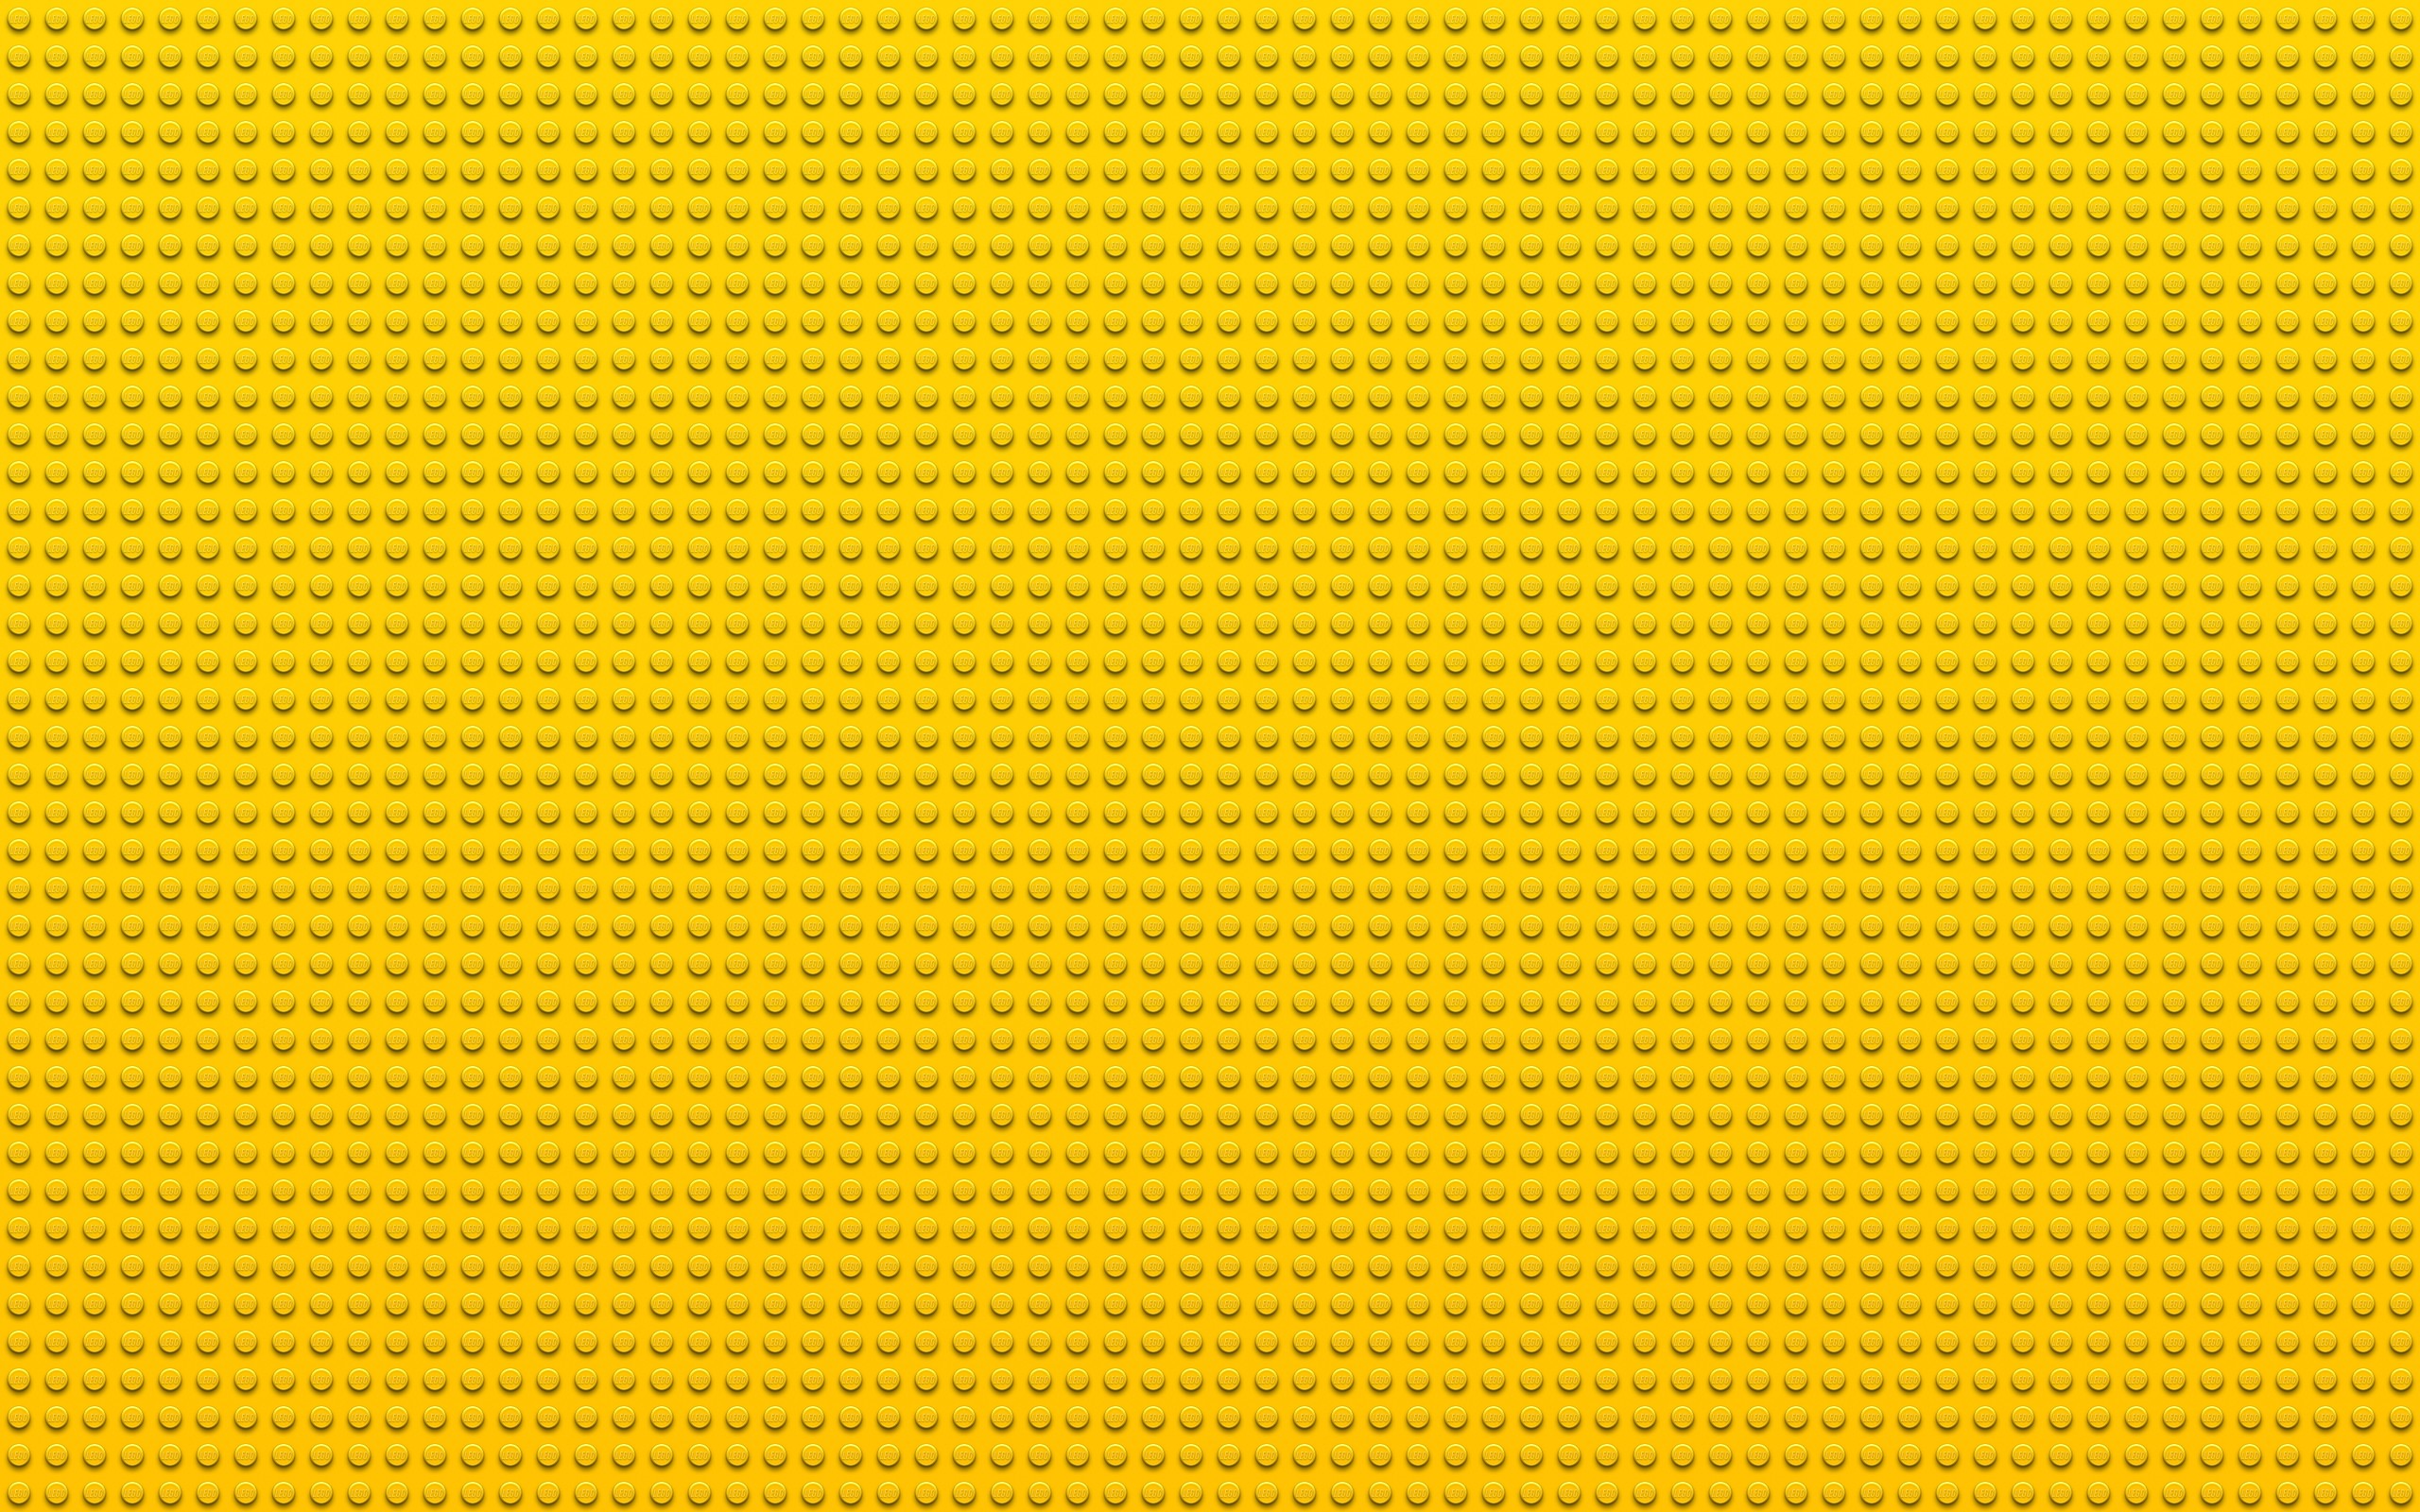 lego, Yellow, Textures, Dots Wallpaper